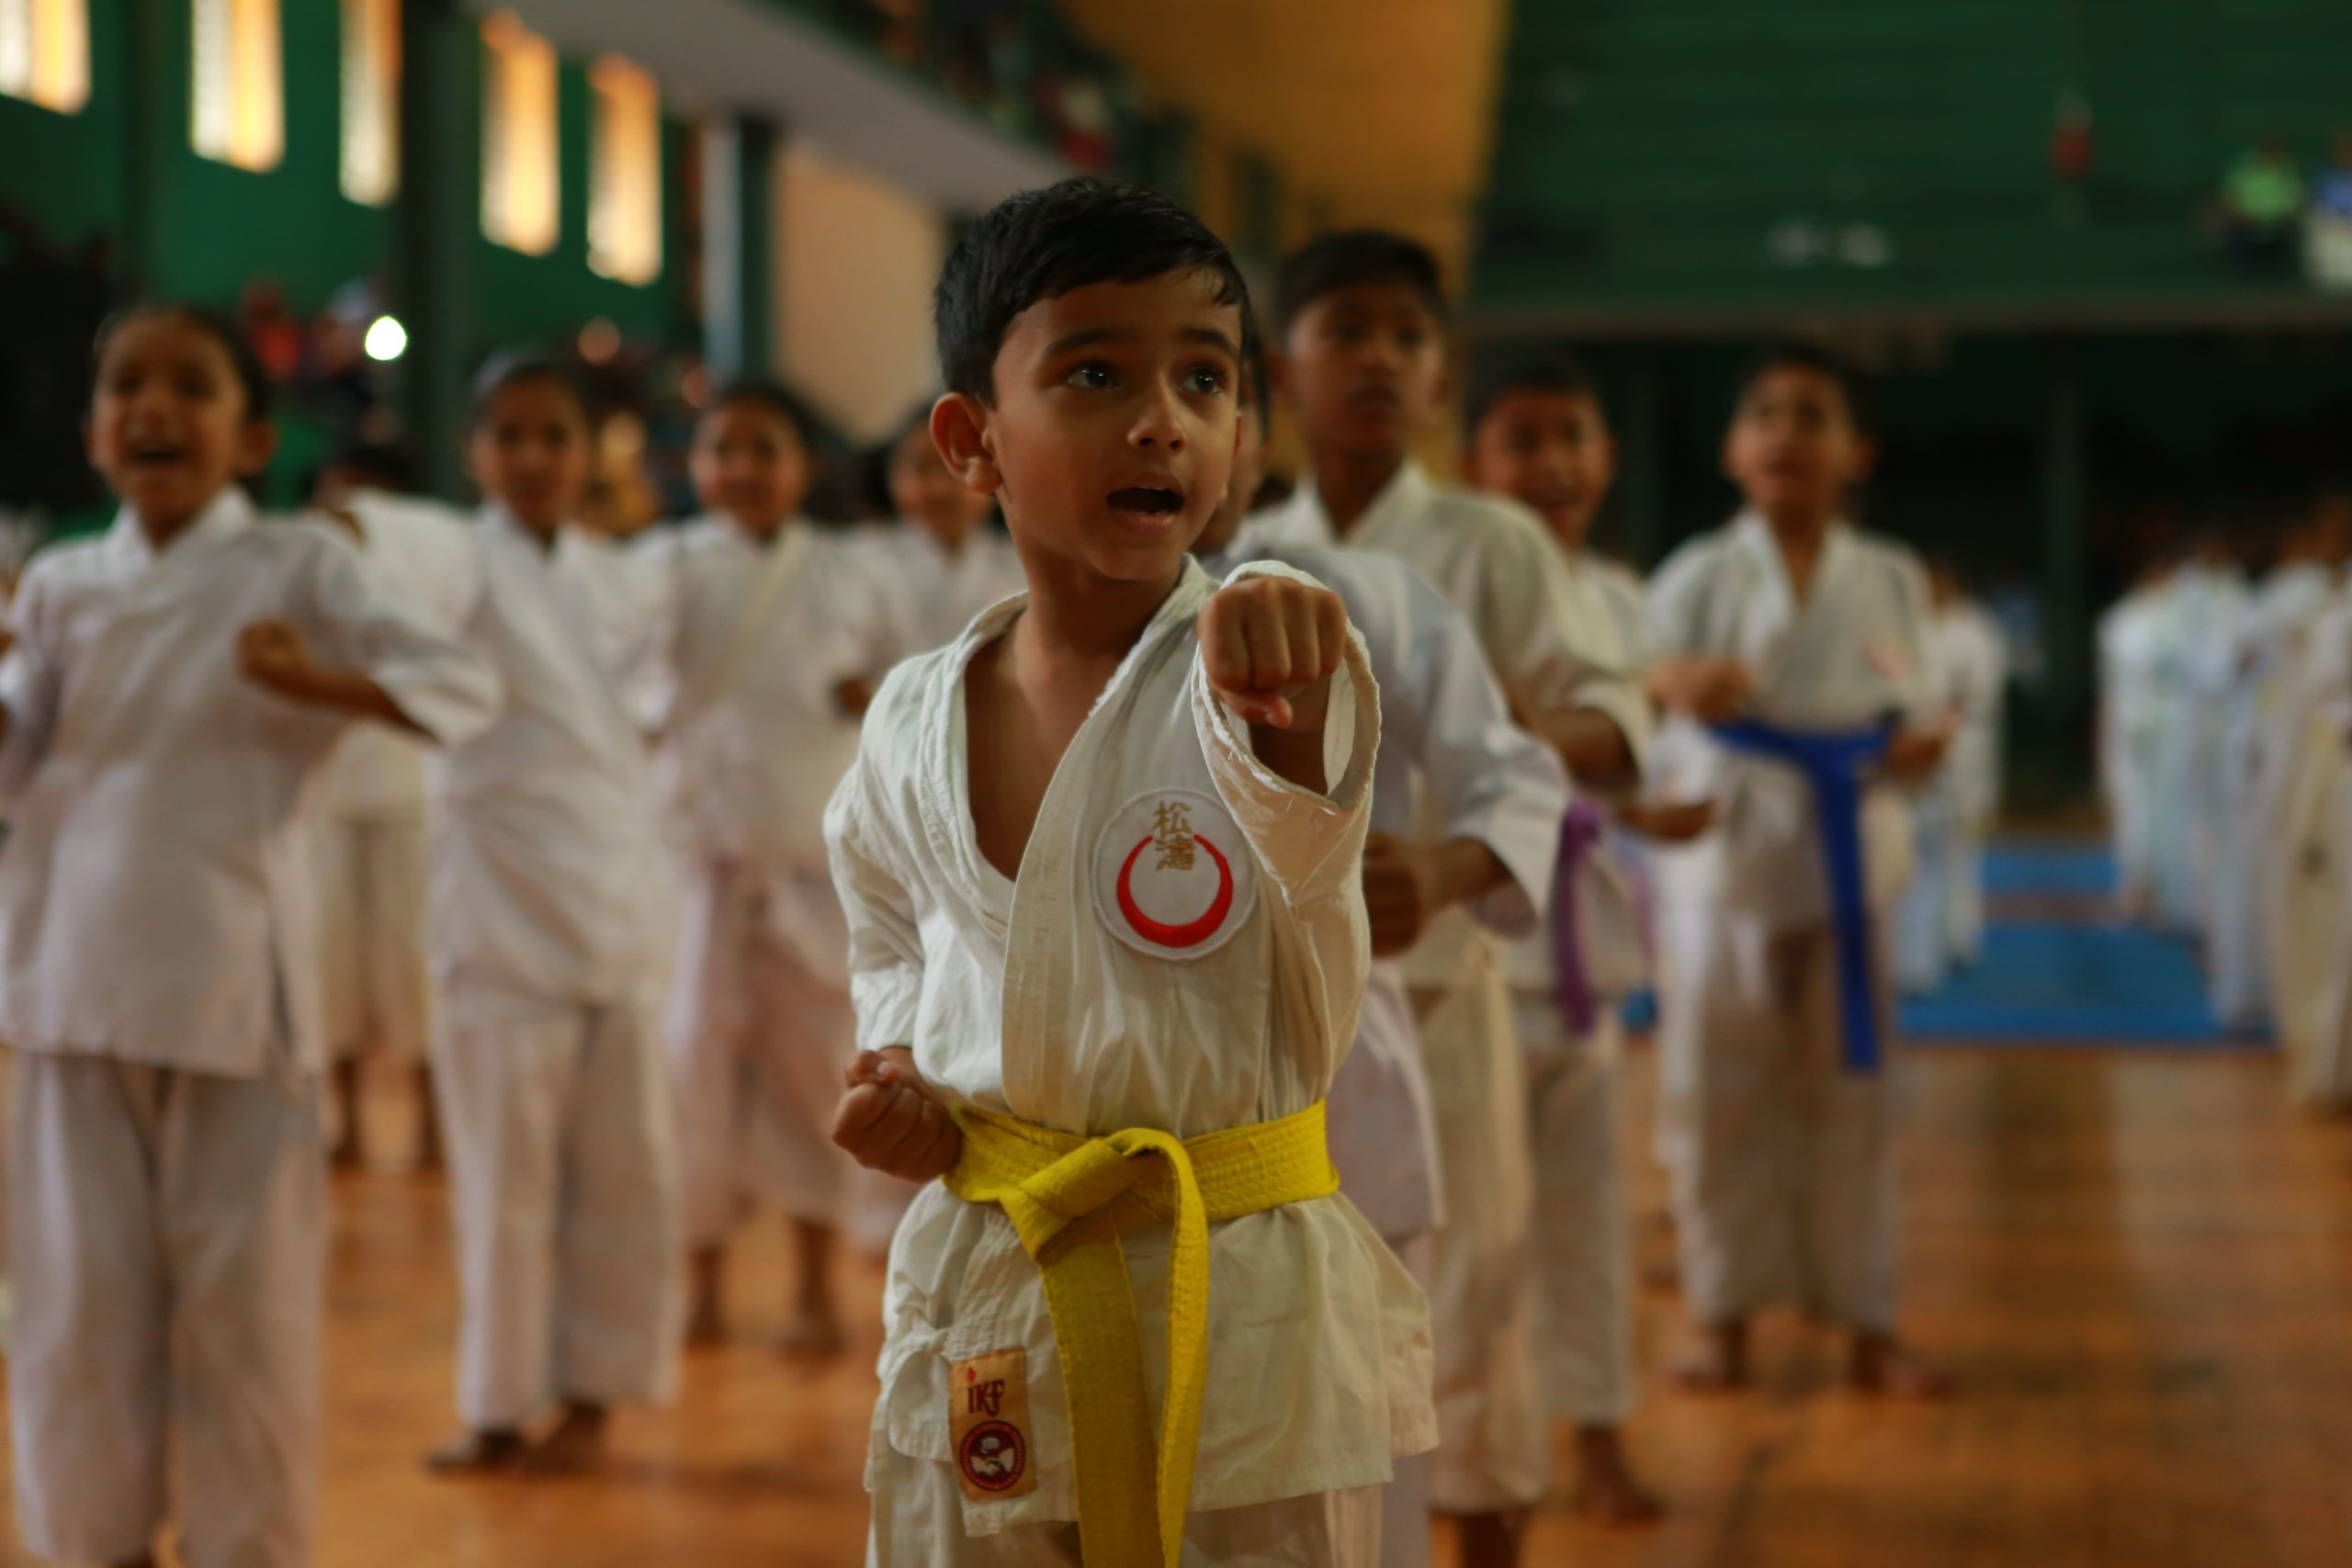 Nochikan Karate International is a premier academy that offers world-class Karate lessons.